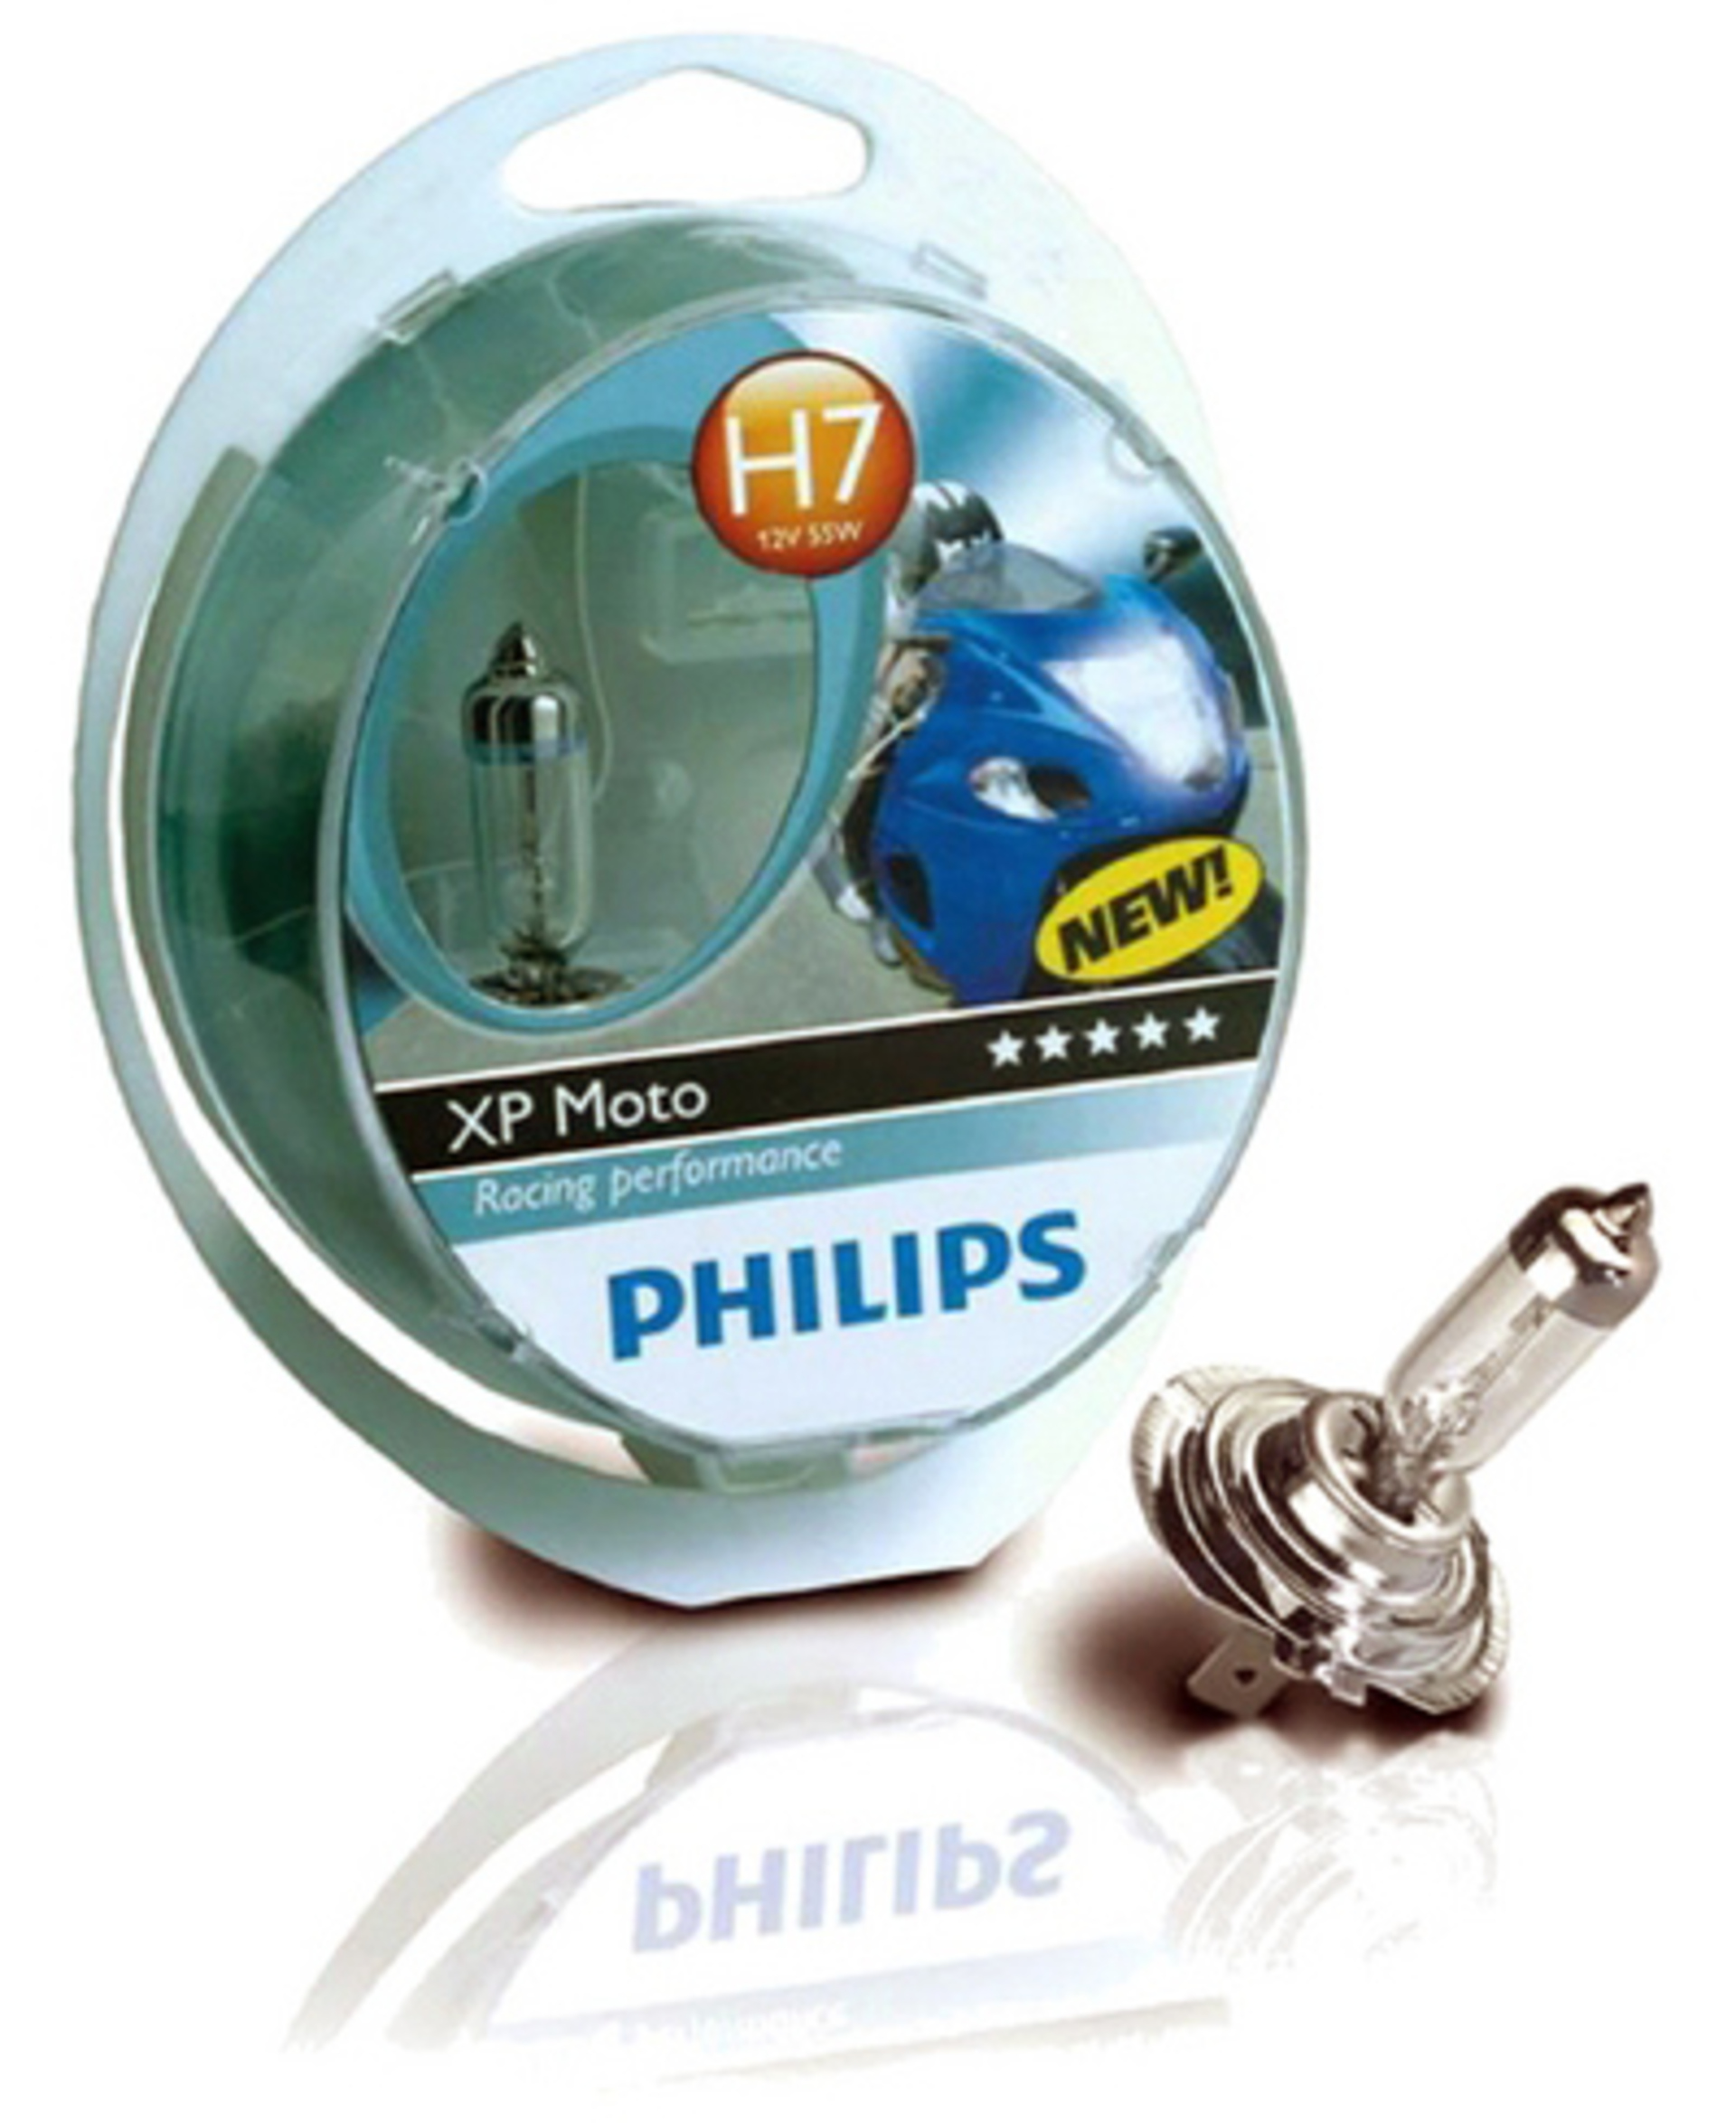 Philips H7 XP Moto 12972XPS1 motožárovka